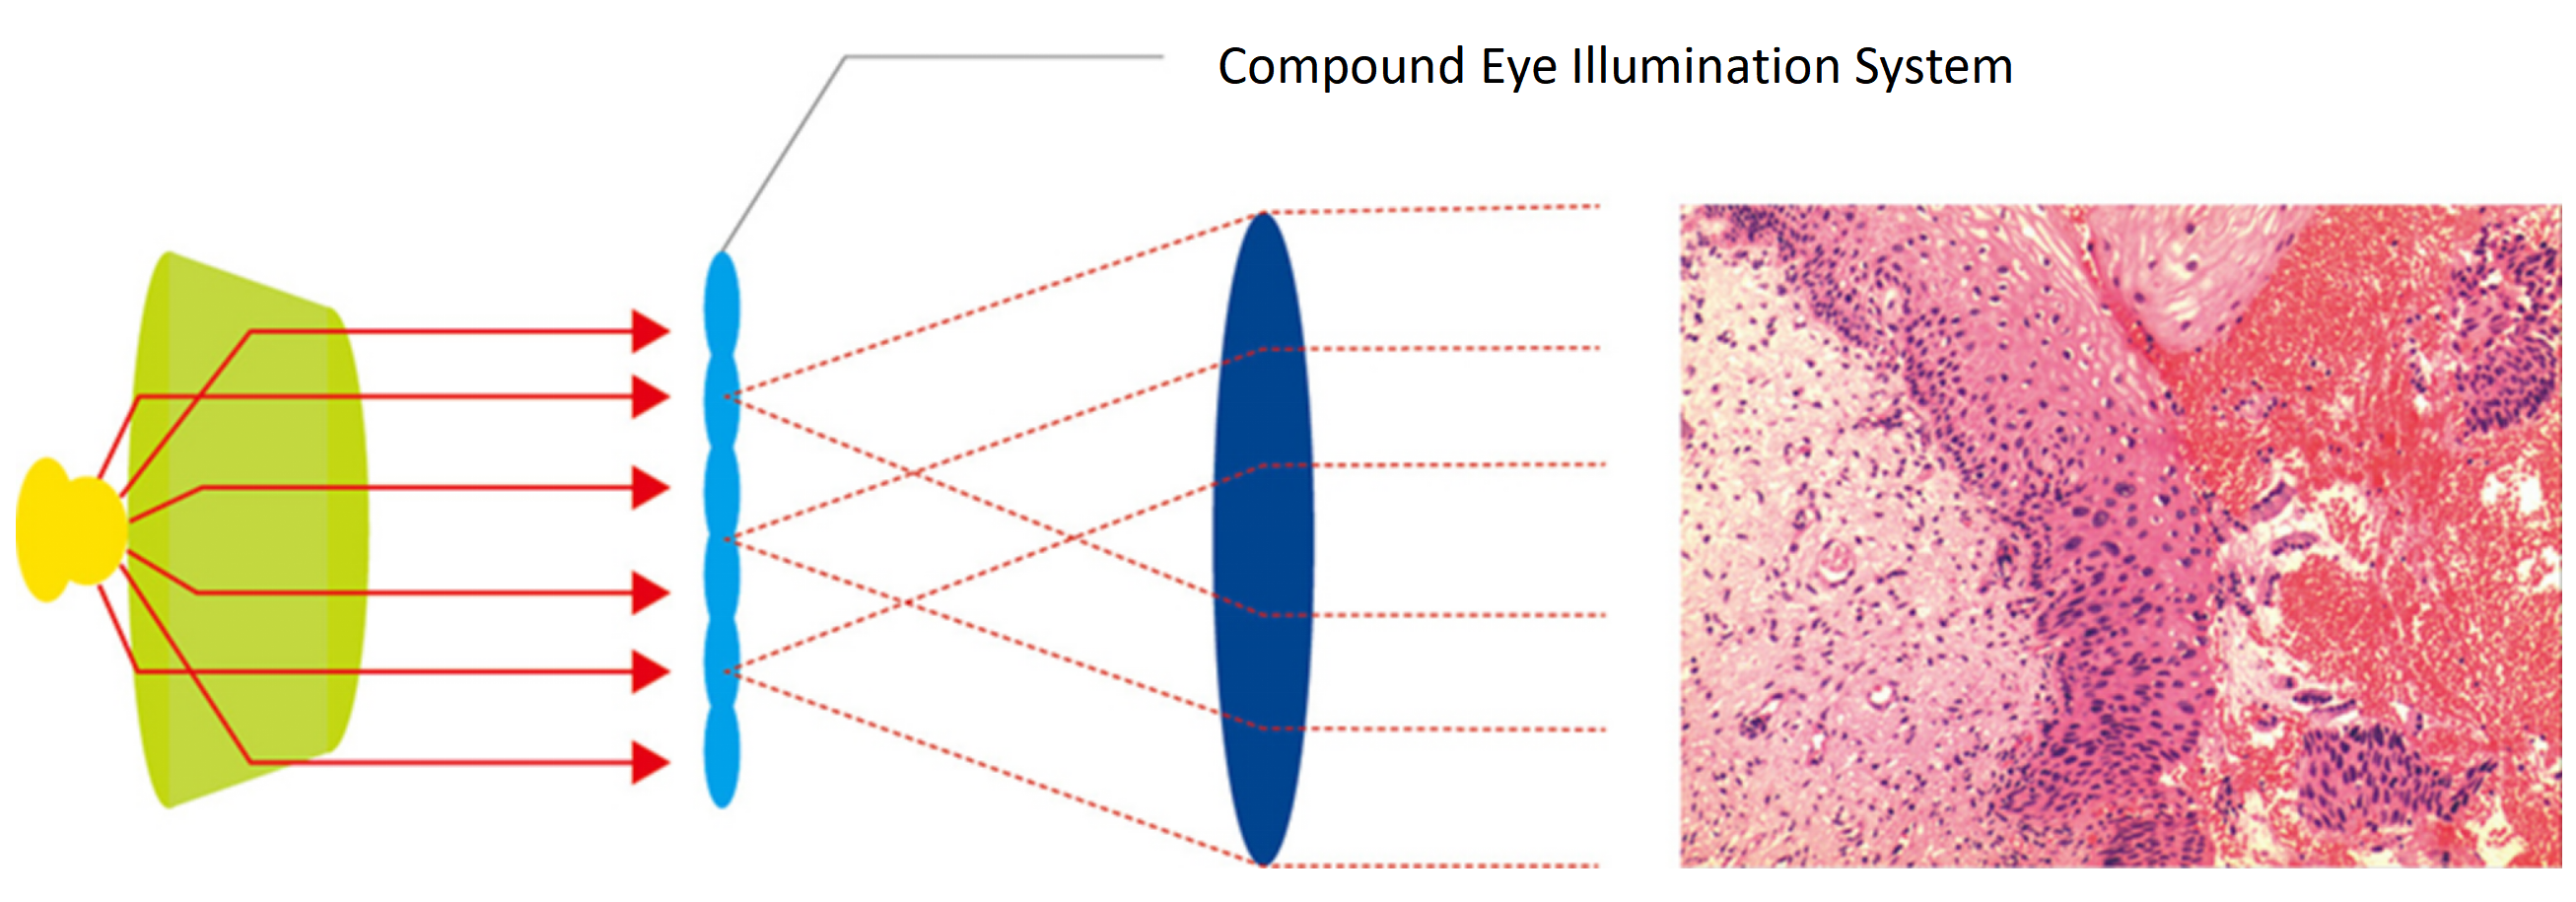 BS-2043 Compound Eye Illumination System